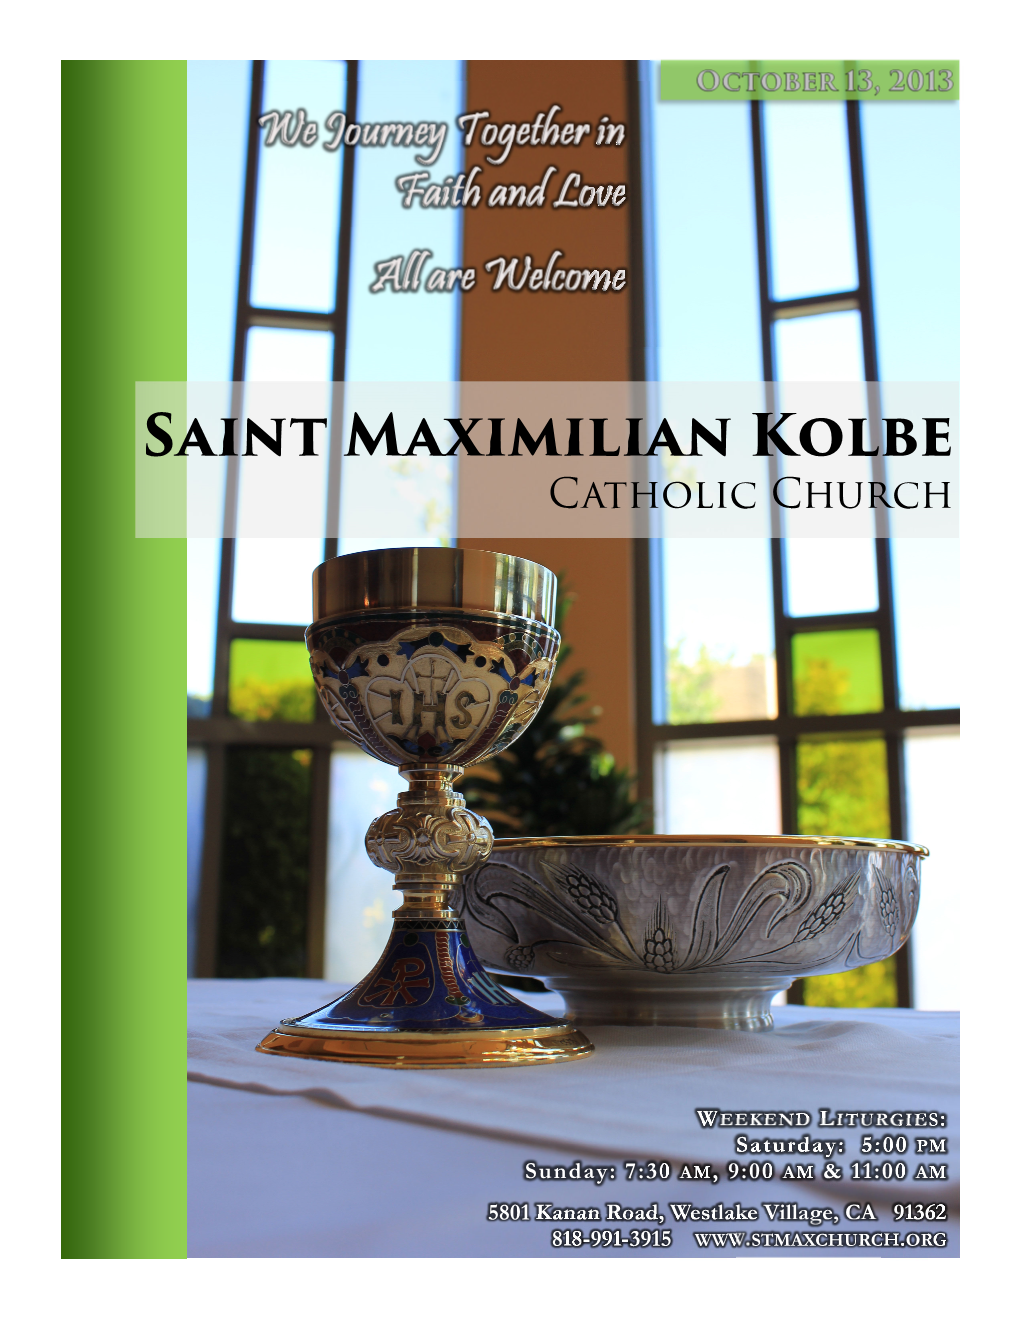 Saint Maximilian Kolbe Catholic Church